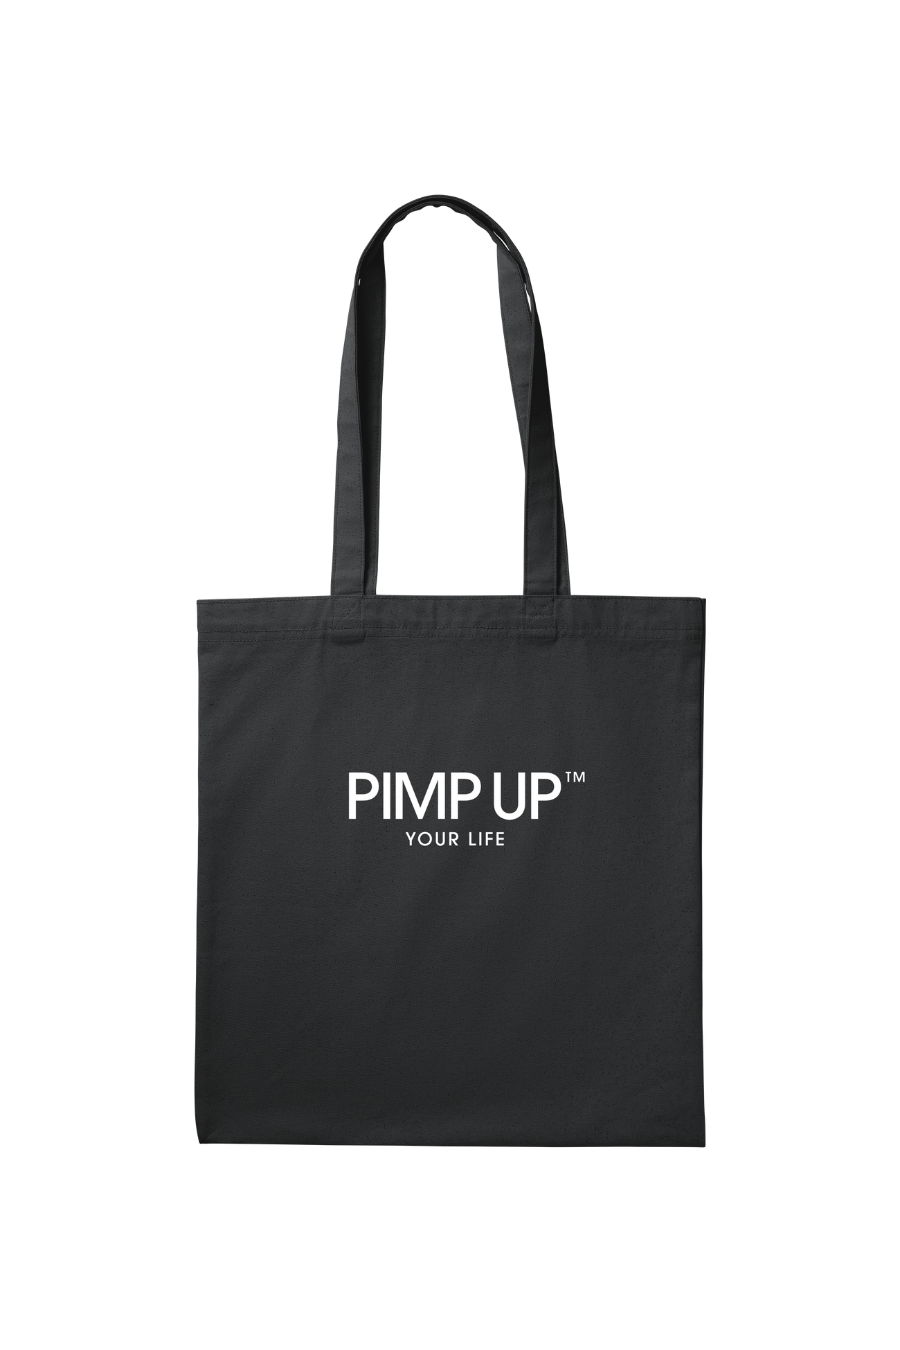 THE PIMP UP™ TOTE BAG